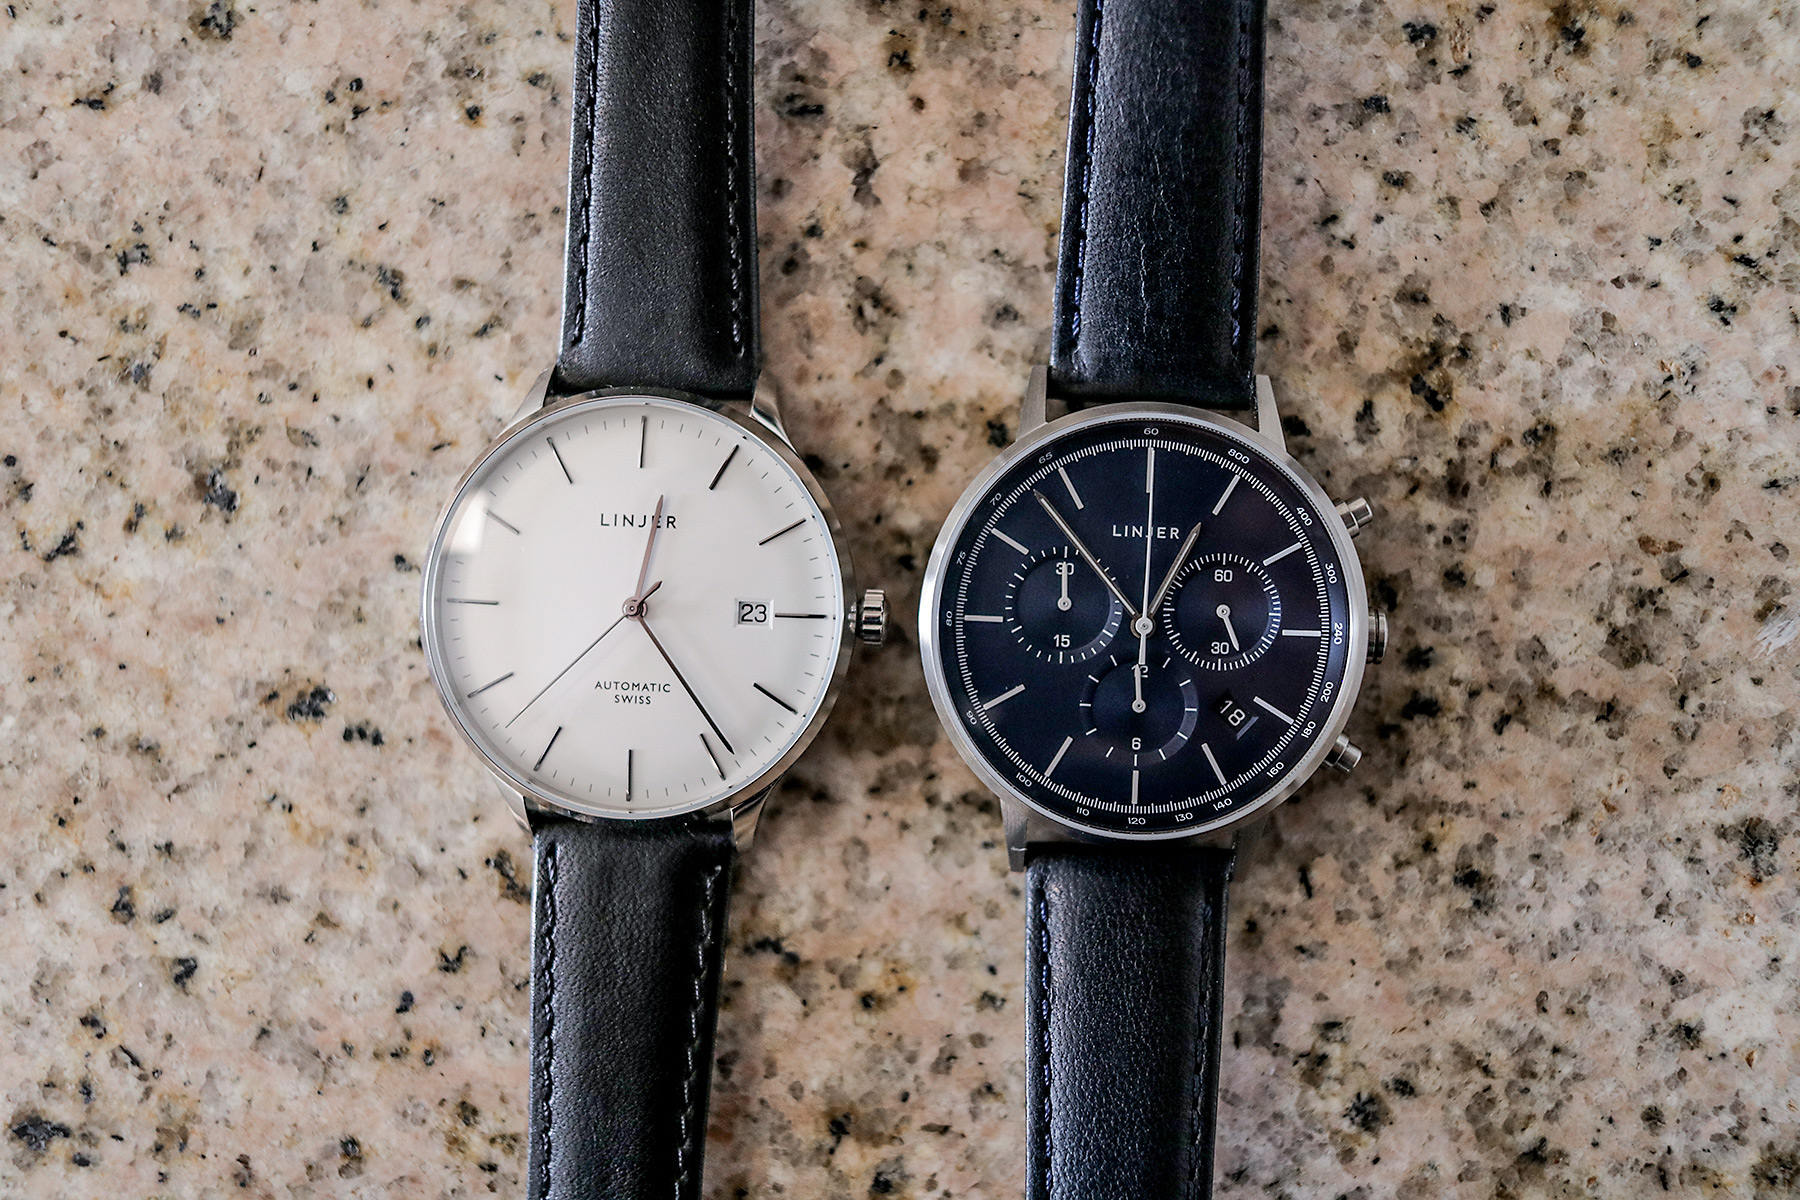 quartz v automatic watch movement